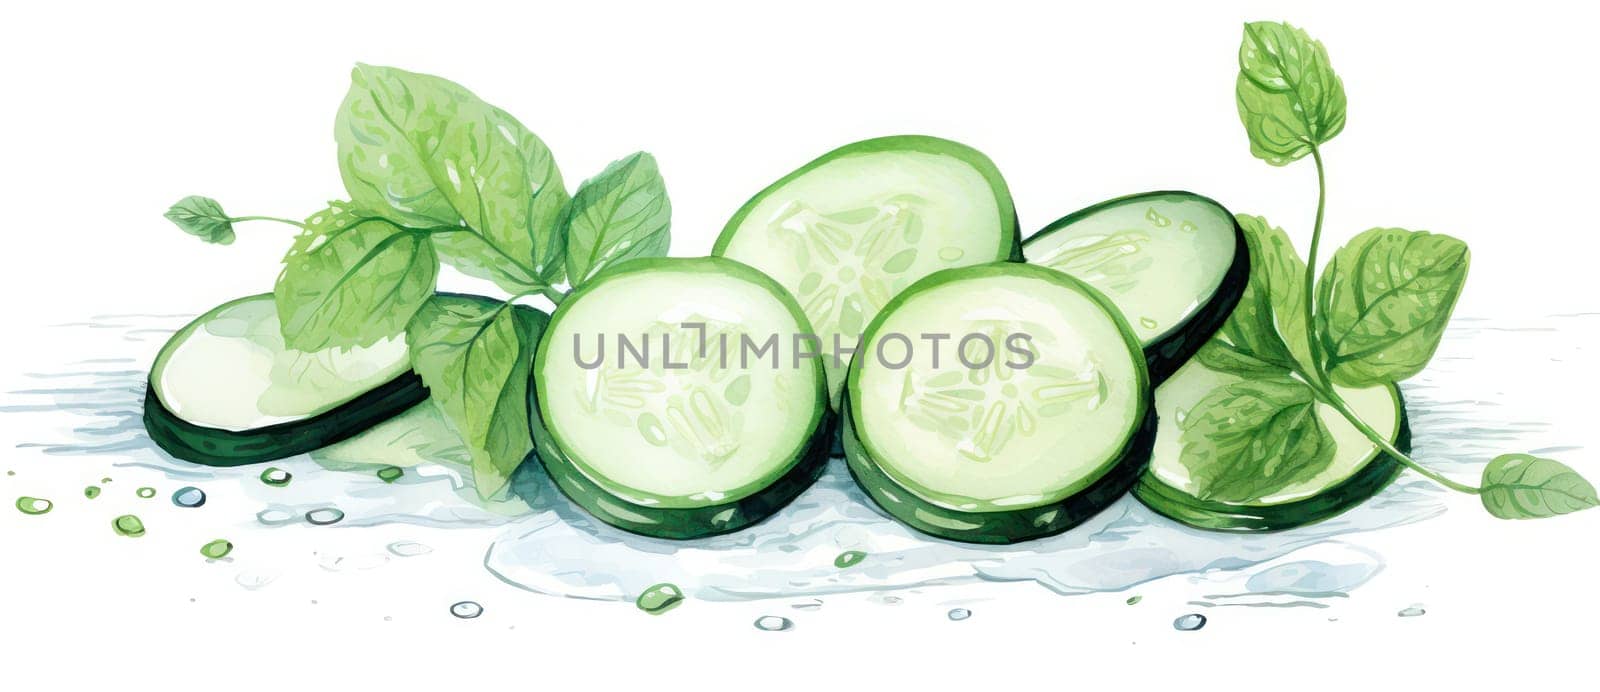 Cucumber, Vegetable, Food: Freshness, Green Organic Fresh Healthy Vitamin Ripe Natural Diet Fruit Background Health Liquid Treatment.